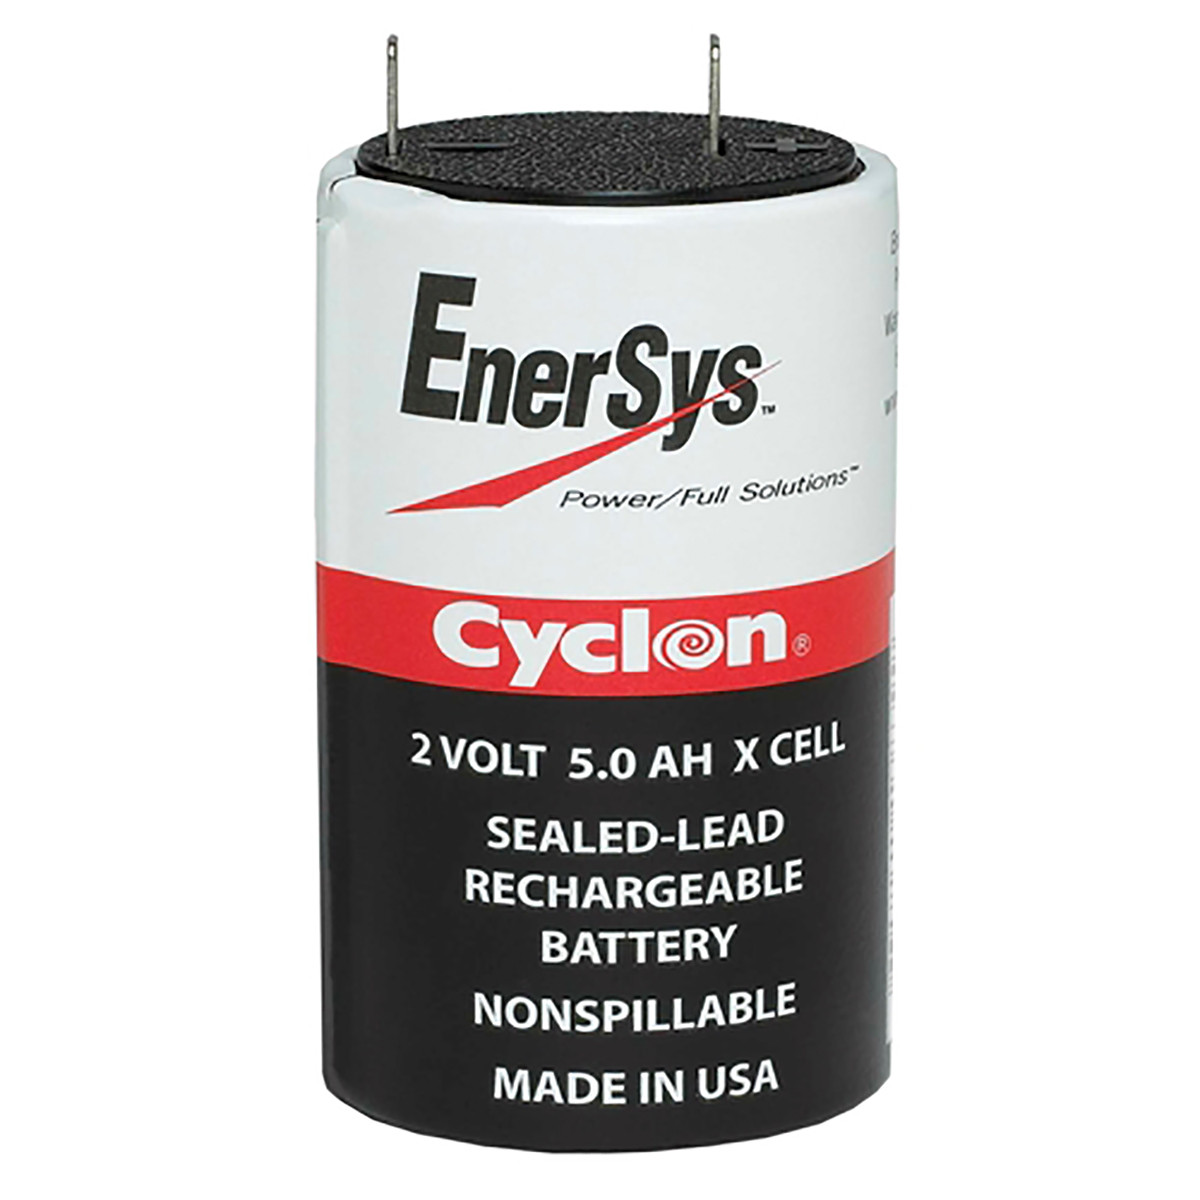 ENERSYS. Cyclone Force аккумуляторы. Cyclon 2v 8.0Ah e Cell. Батарея 2 вольта ENERSYS купить.